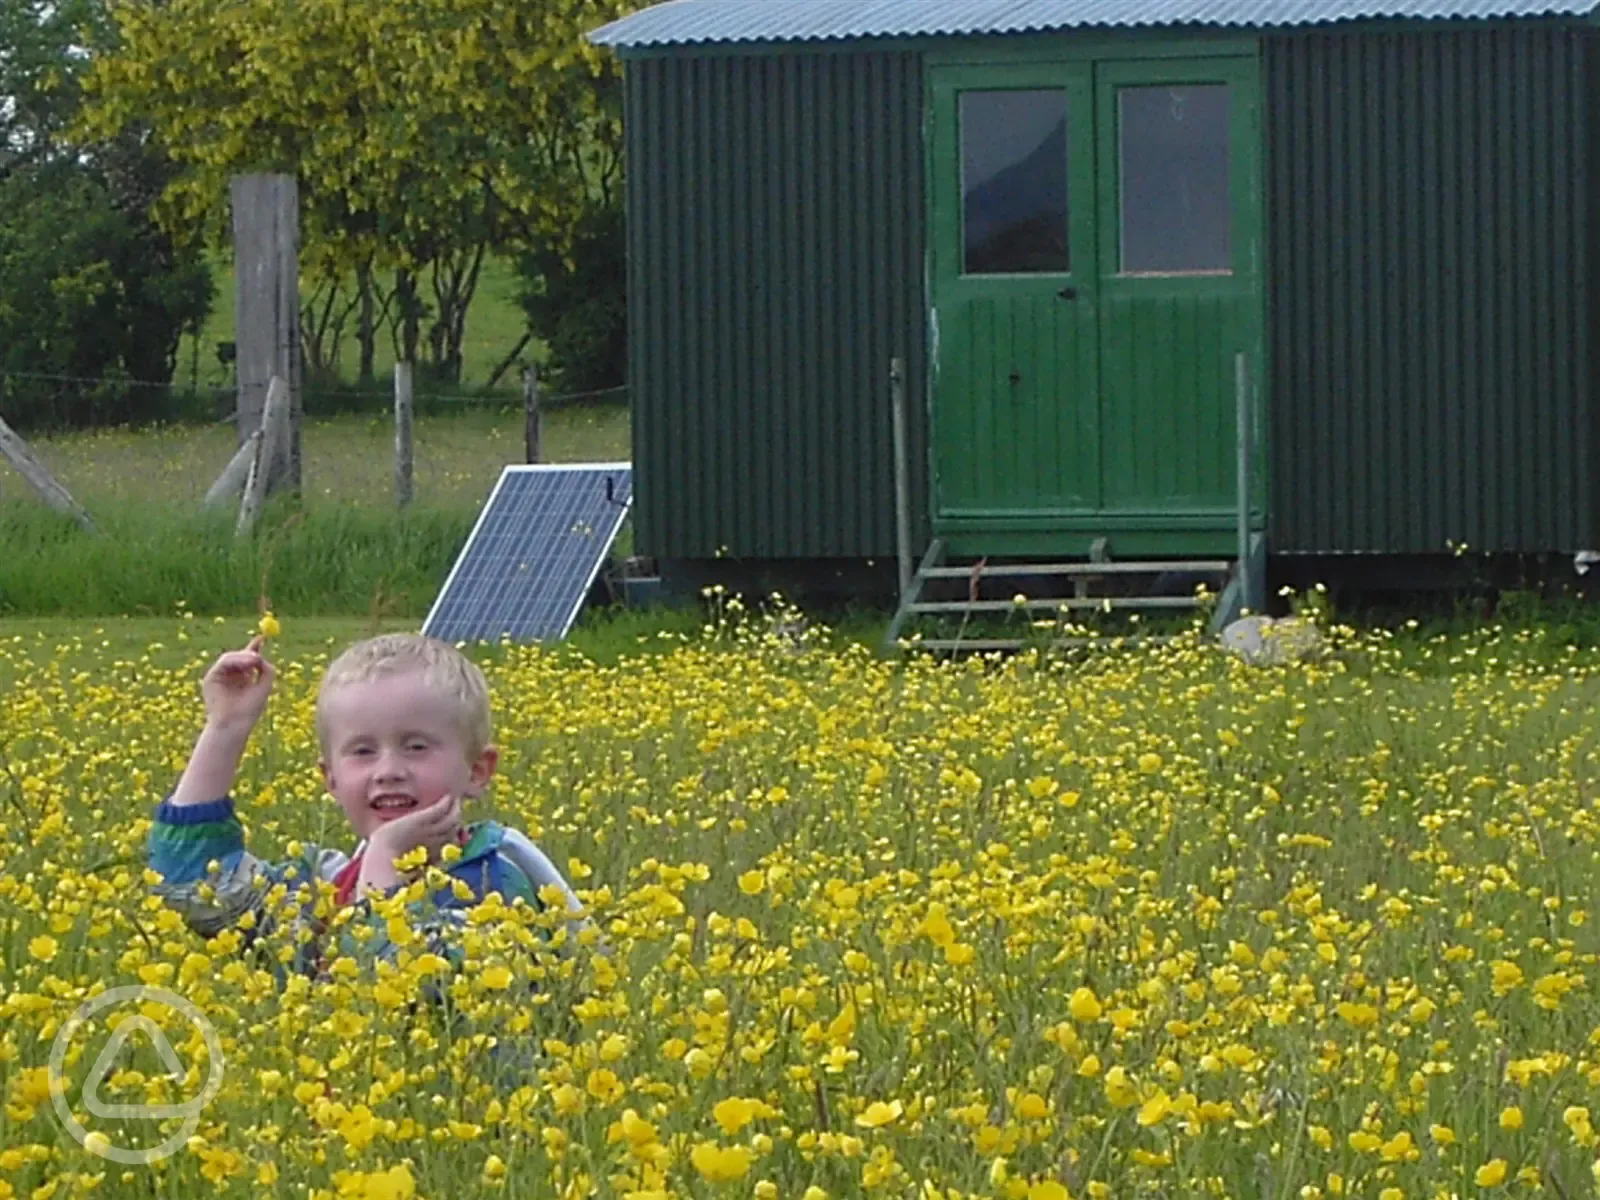 The shepherds hut paddock in full bloom